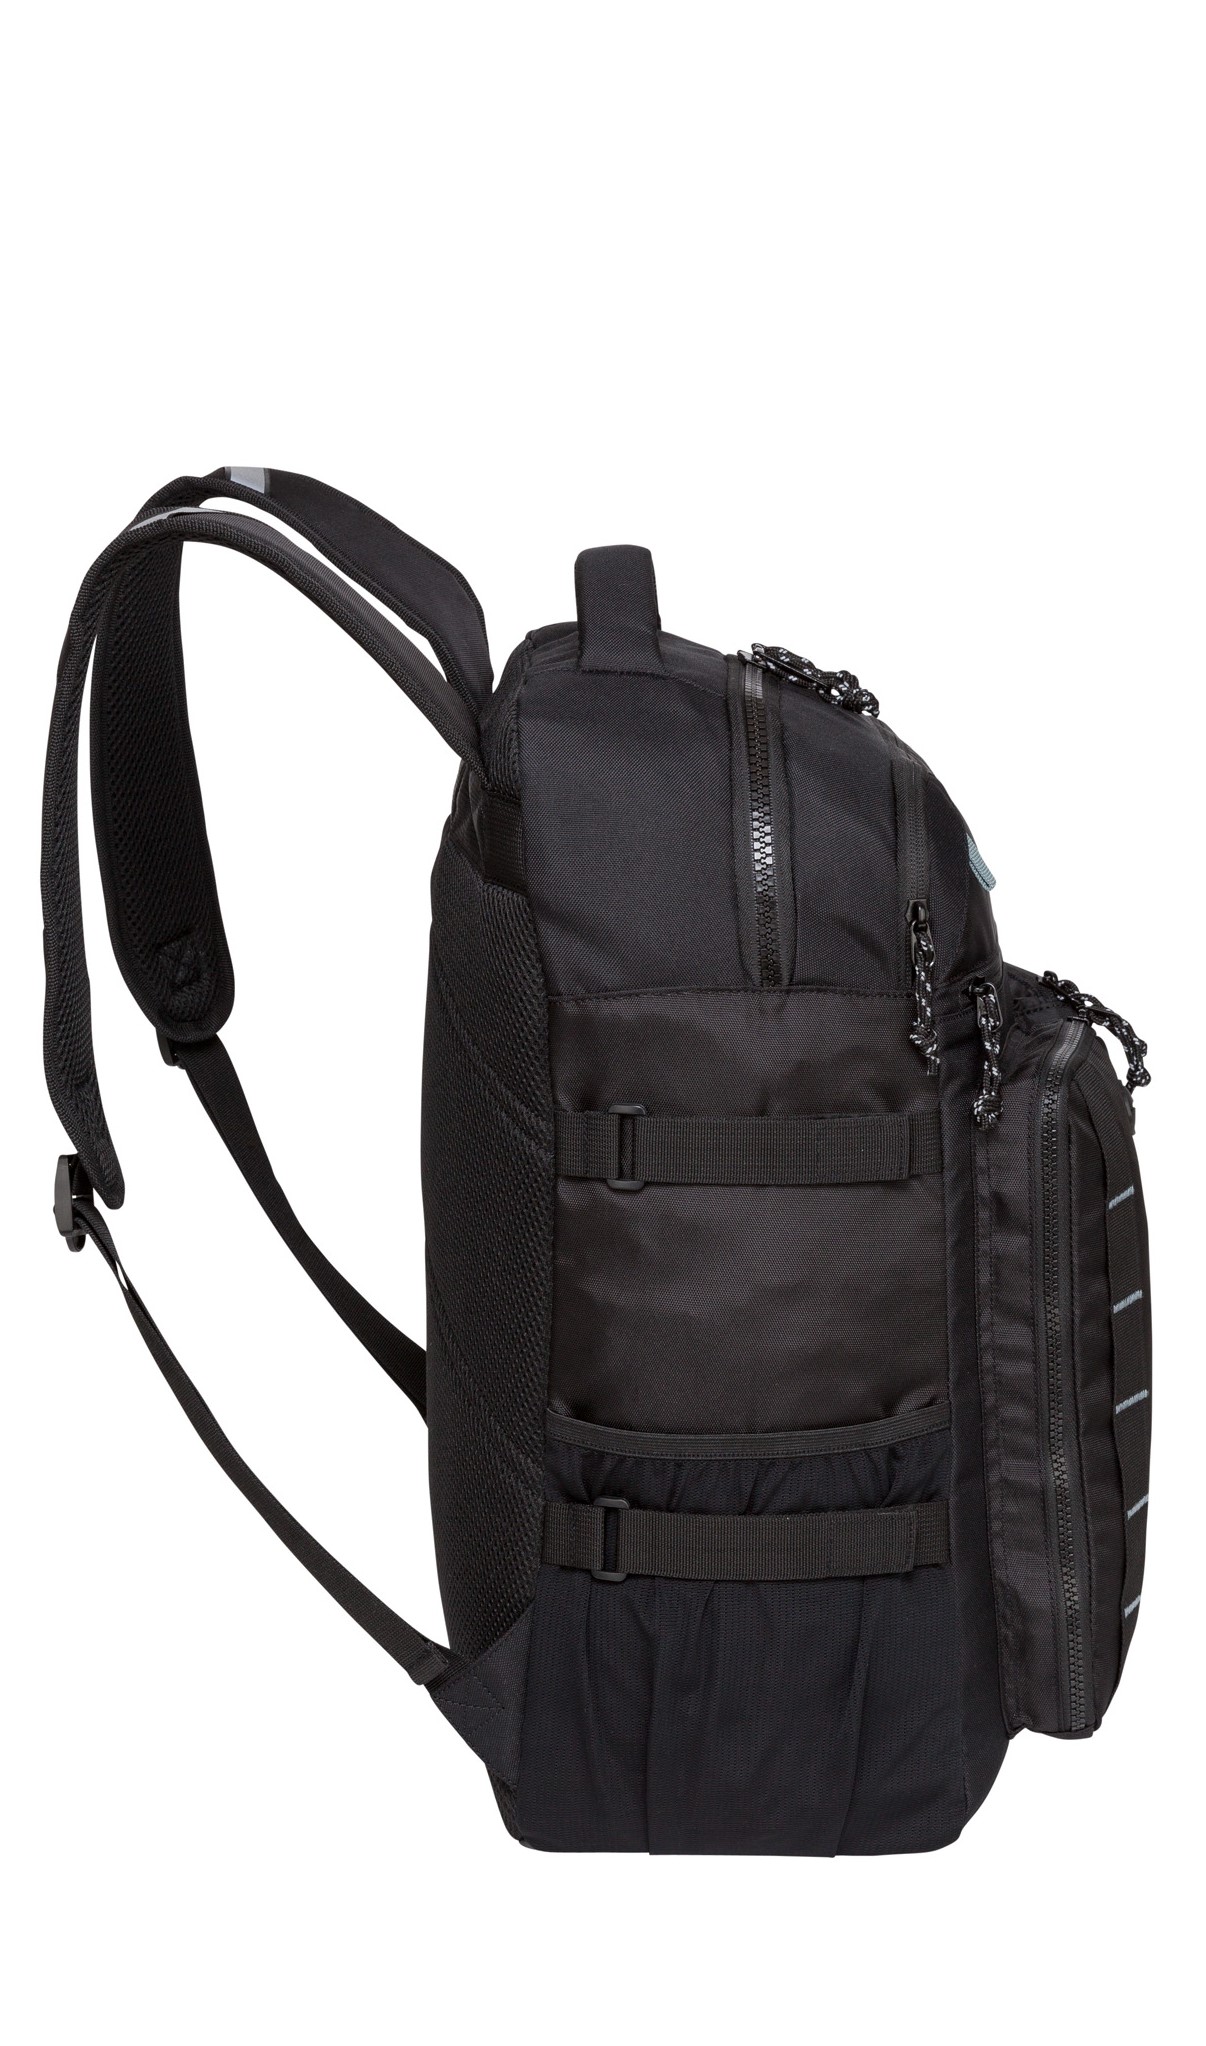 SwissTech Lucerne 34.4 L School Backpack Laptop Tablet Sleeve, Black, Unisex, Adult, Teen, Polyester - image 4 of 9